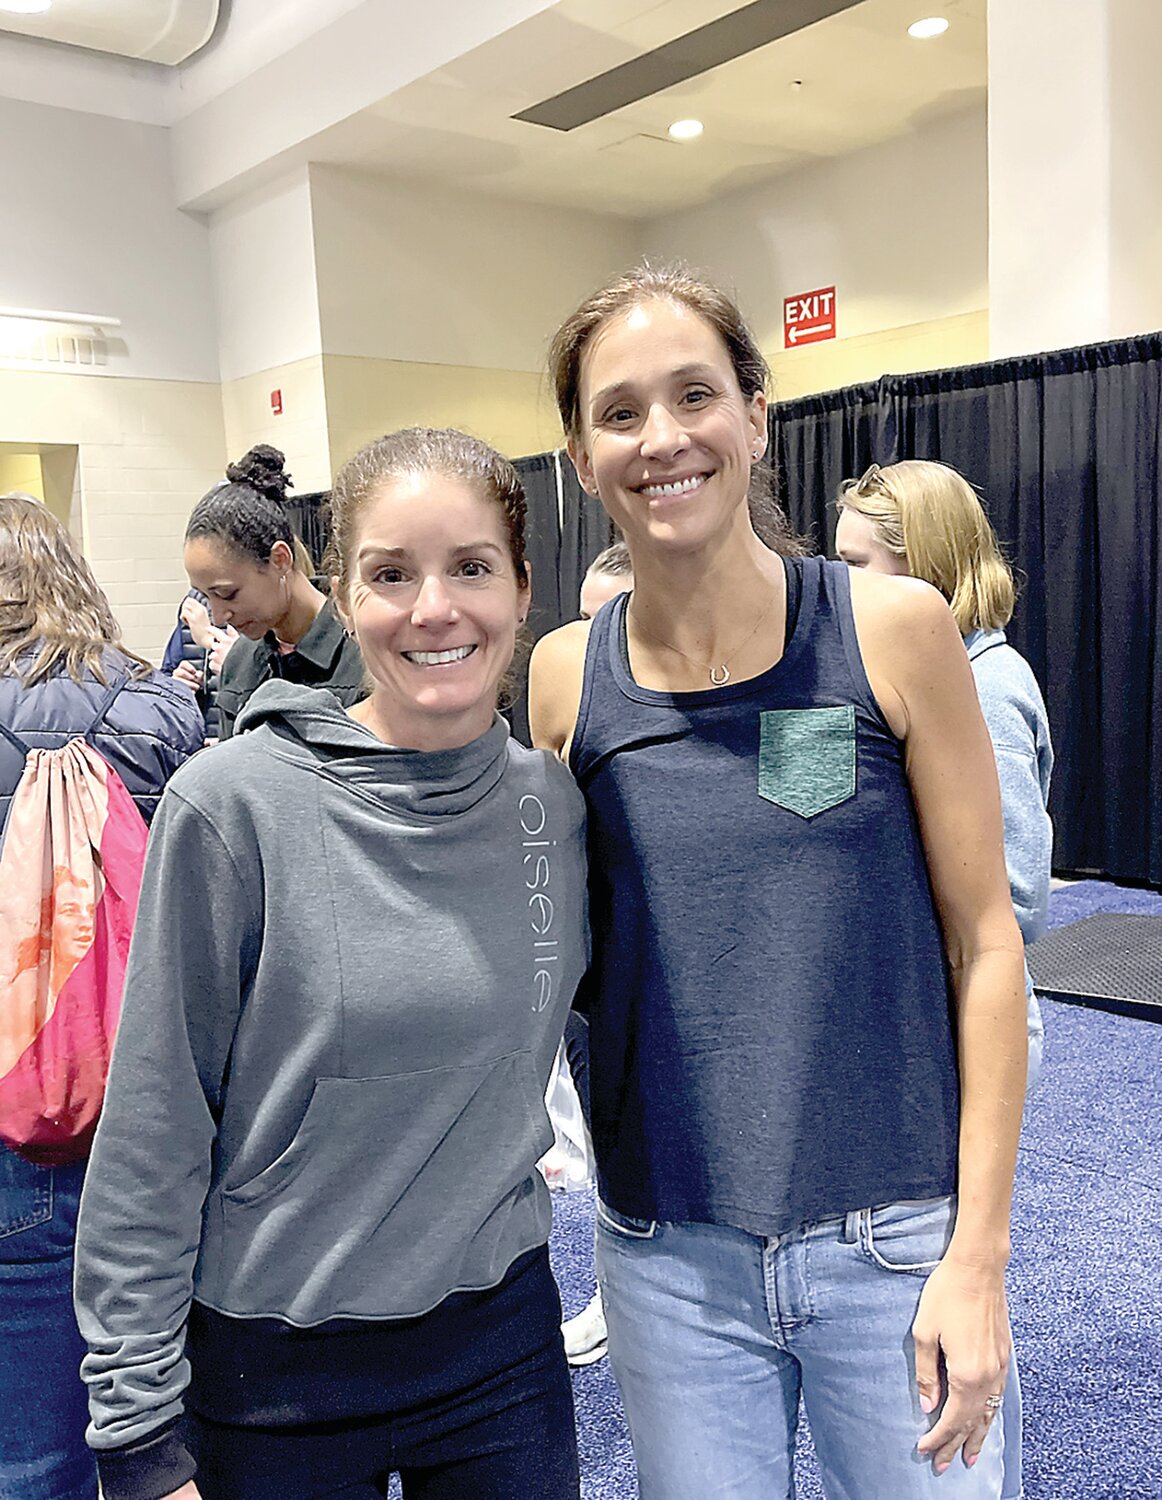 At the Boston Marathon, Perkasie's Stephanie Savastano, left, had a chance to meet United States Olympic marathon great Kara Goucher.